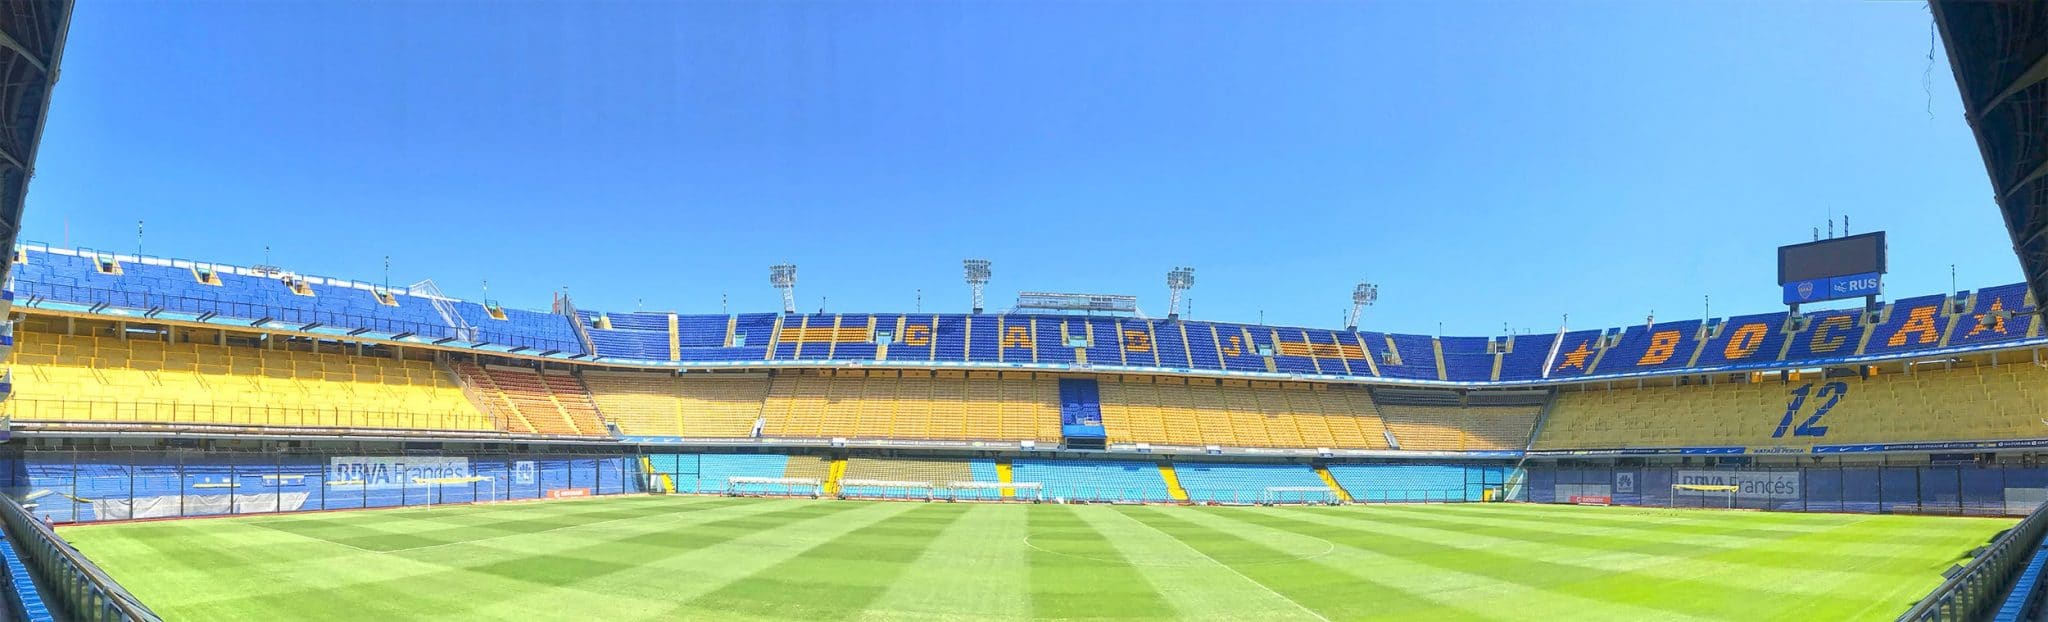 La Bombonera visit tour stadium